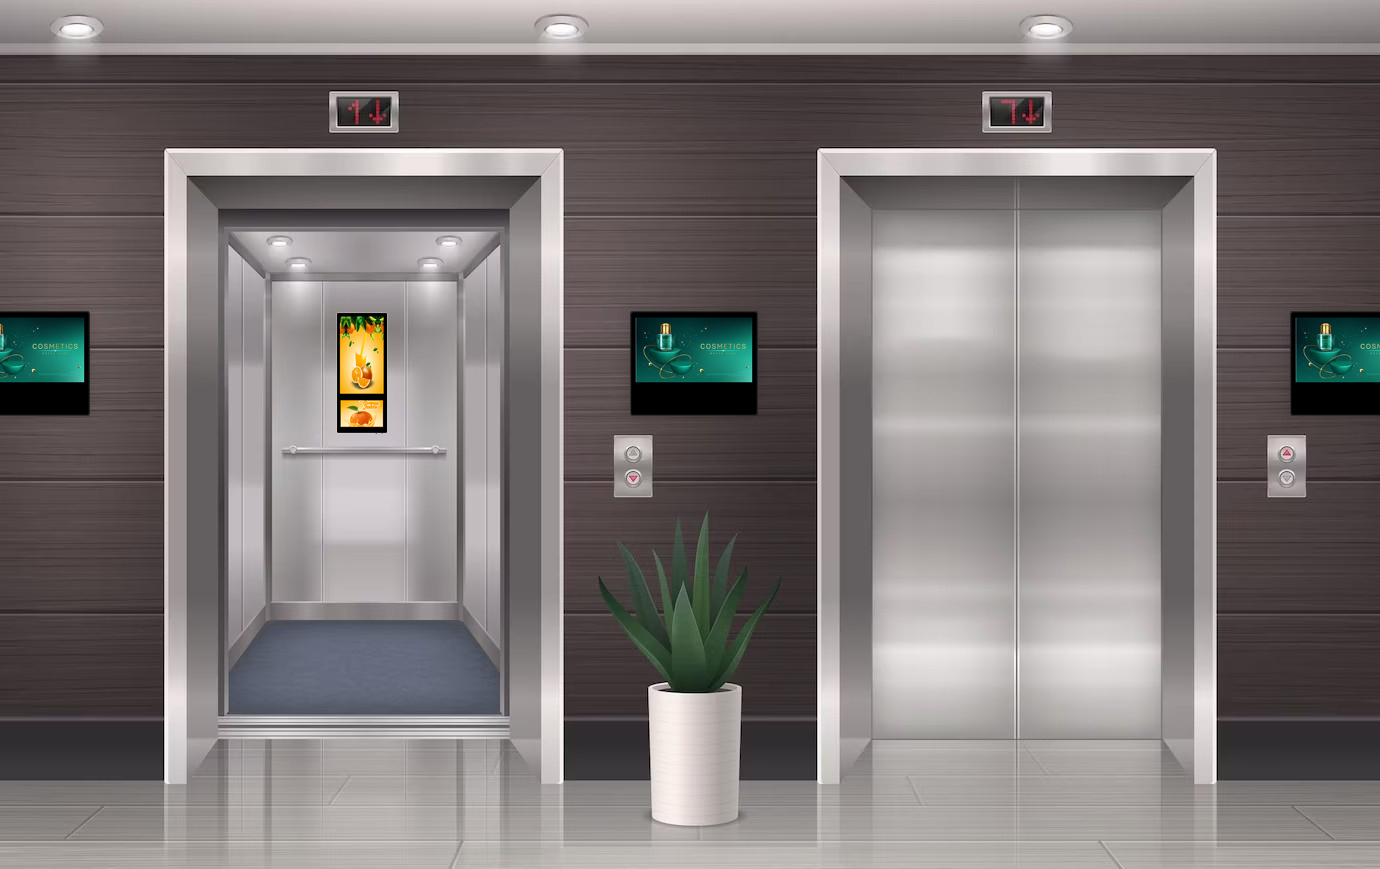 Elevator digital advertising LCD screen